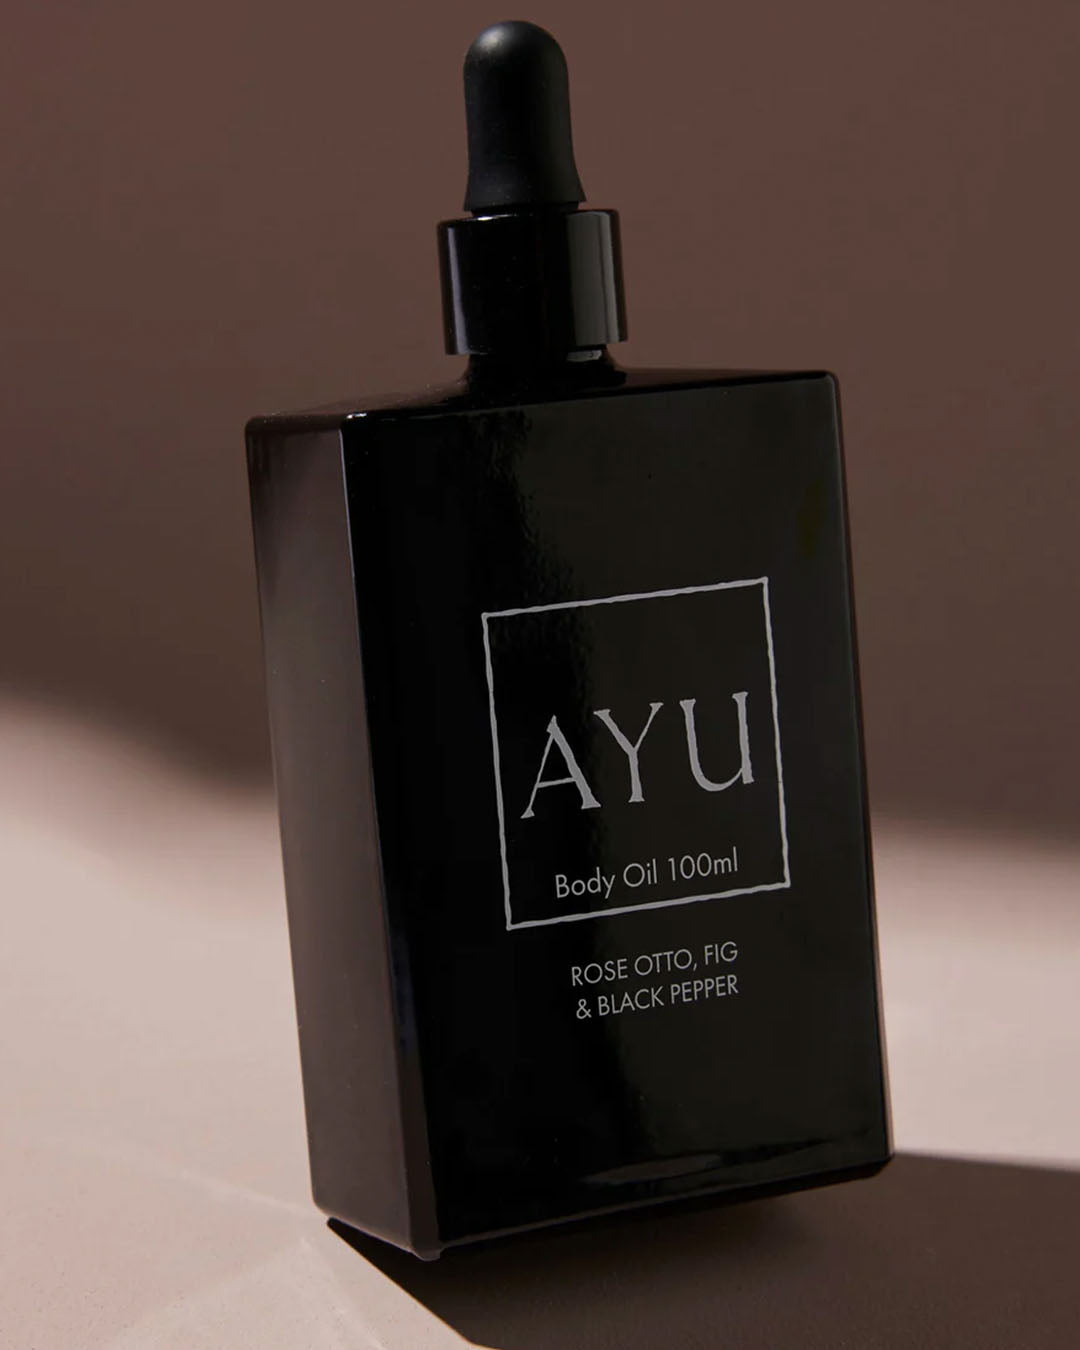 Rose Otto, Fig & Black Pepper Body Oil 100ml Skincare by Ayu - Prae Store